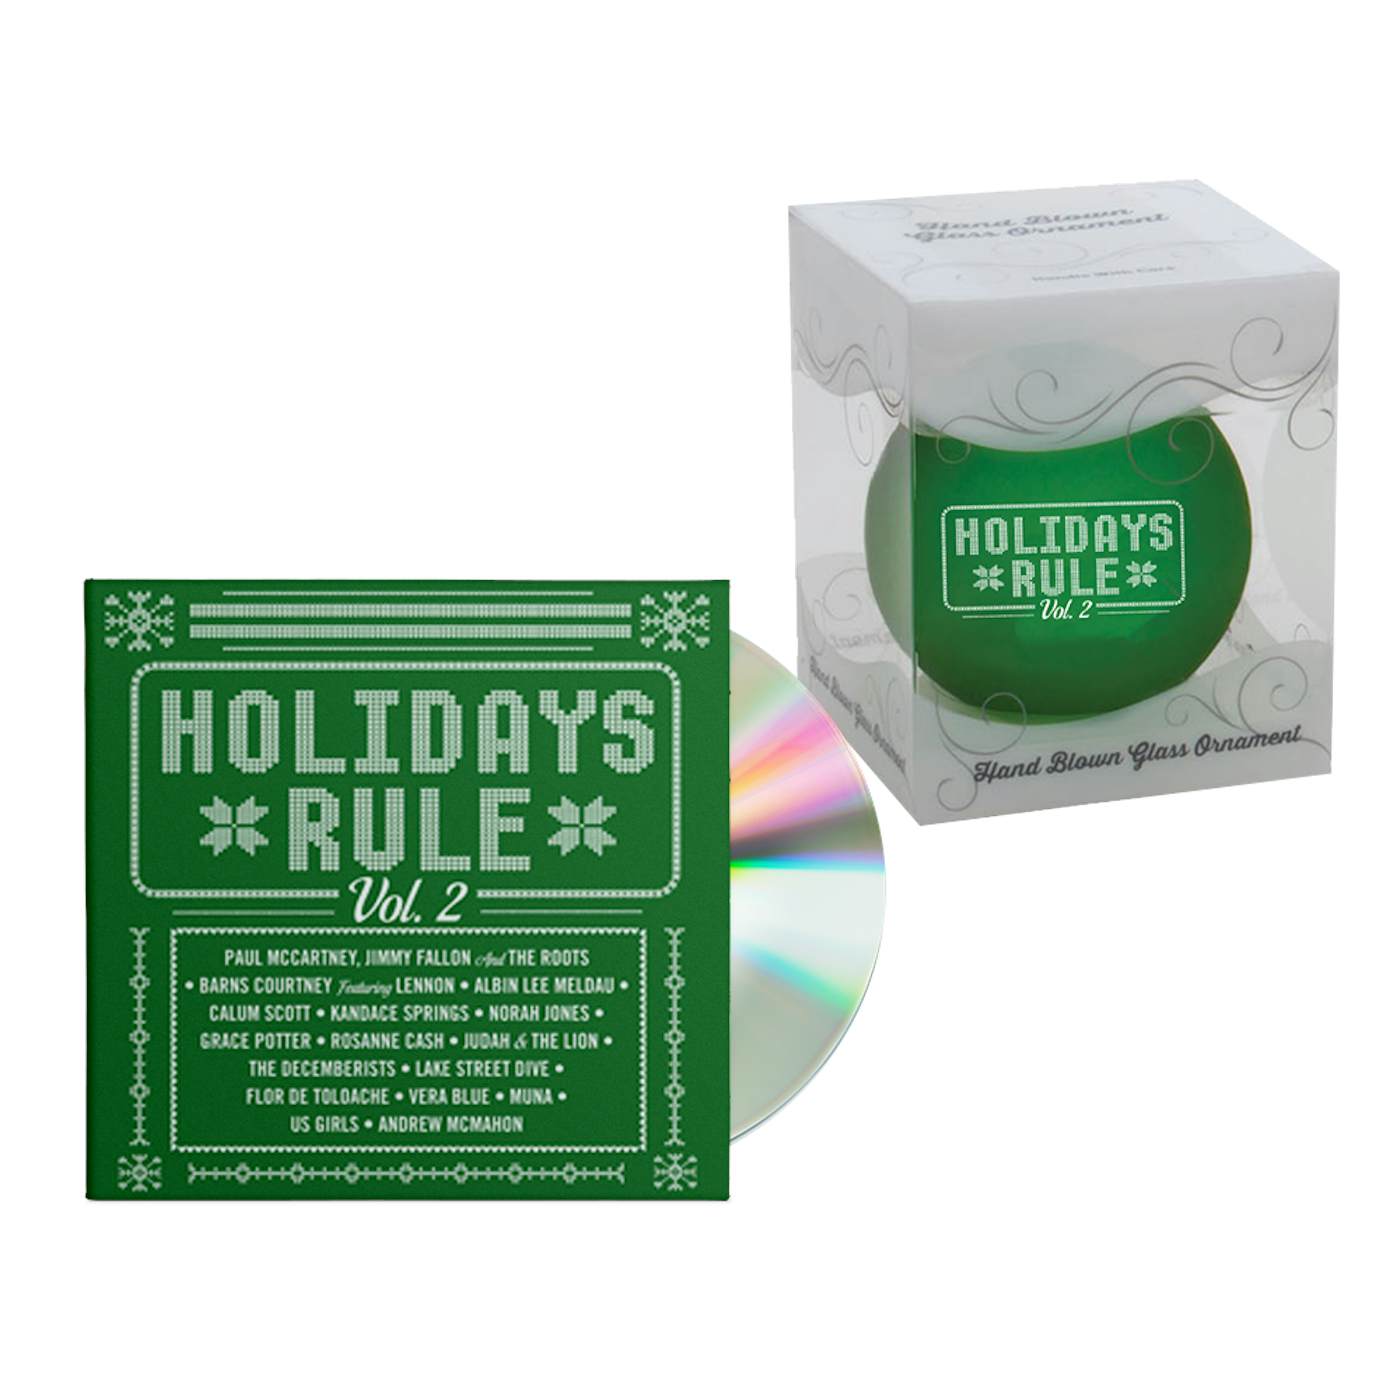 Holidays Rule CD + Ornament